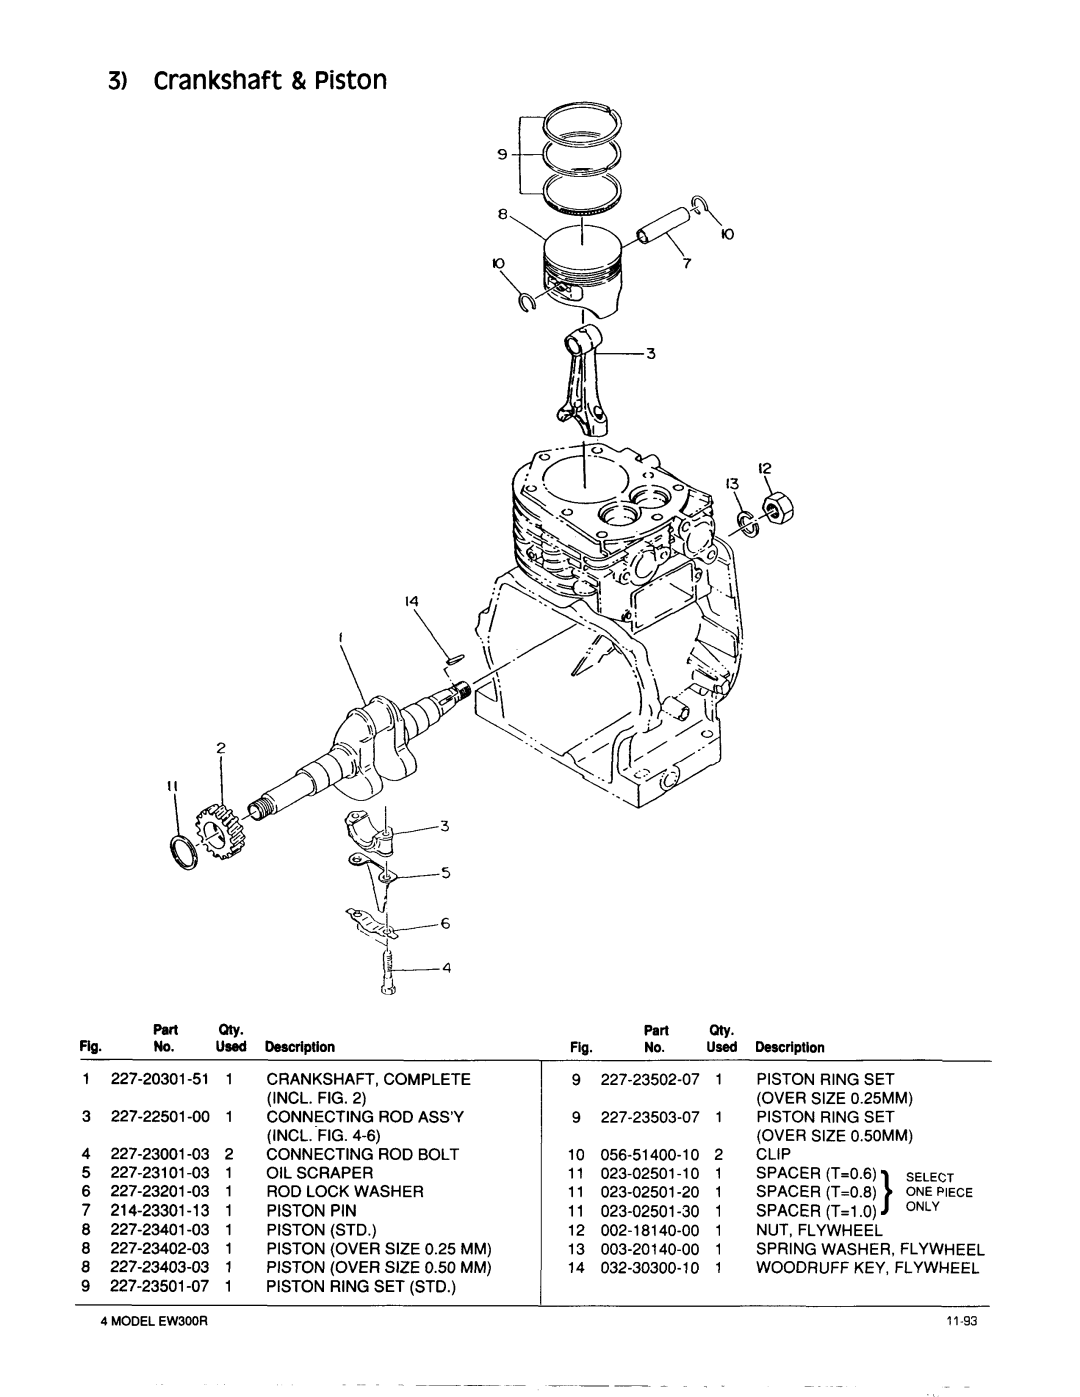 Makita EW300R manual 3Crankshaft & Piston, Incl Fig 